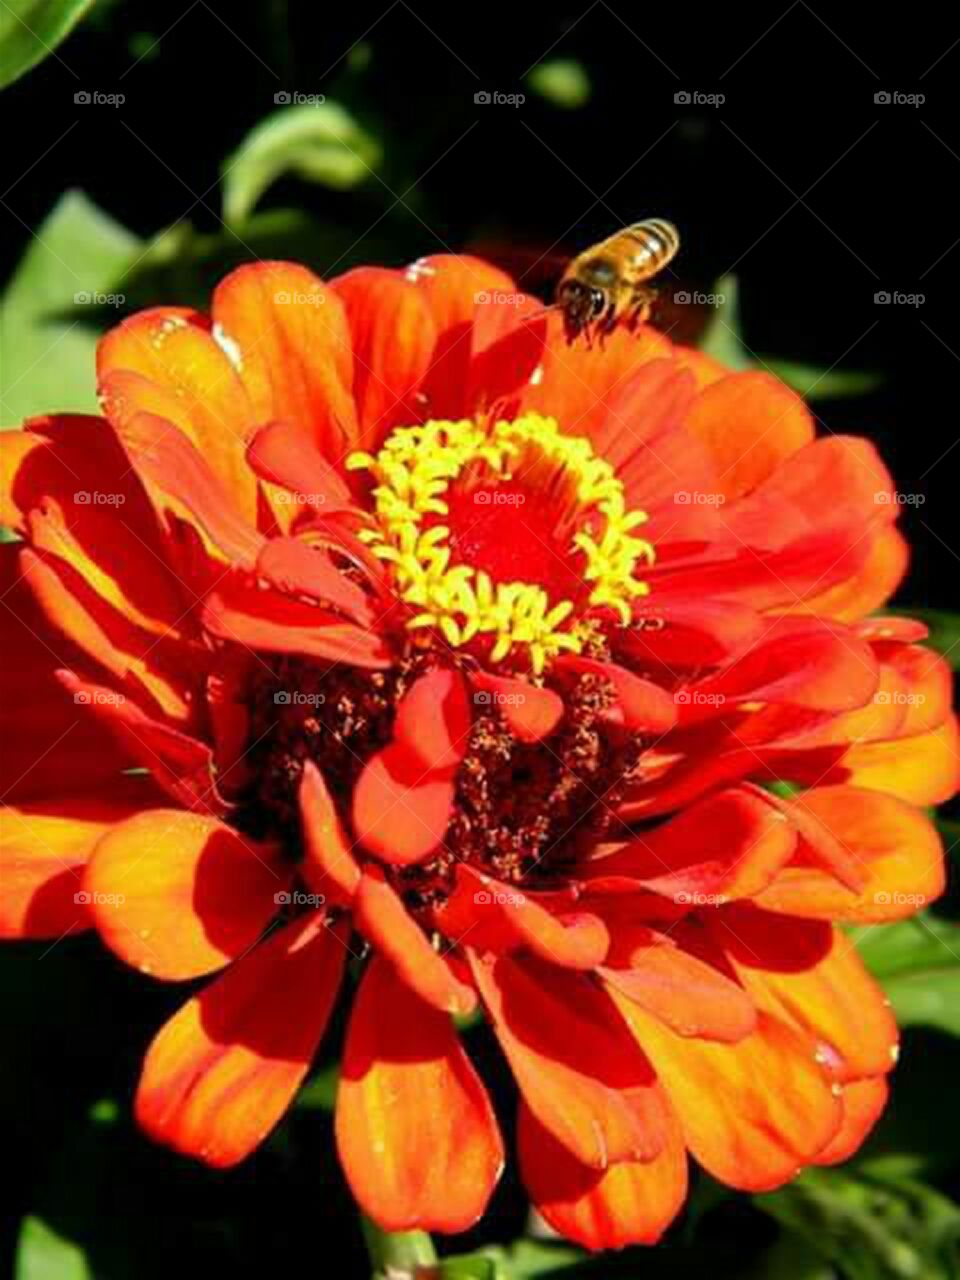 honeybee in flight hovering over bright orange flower